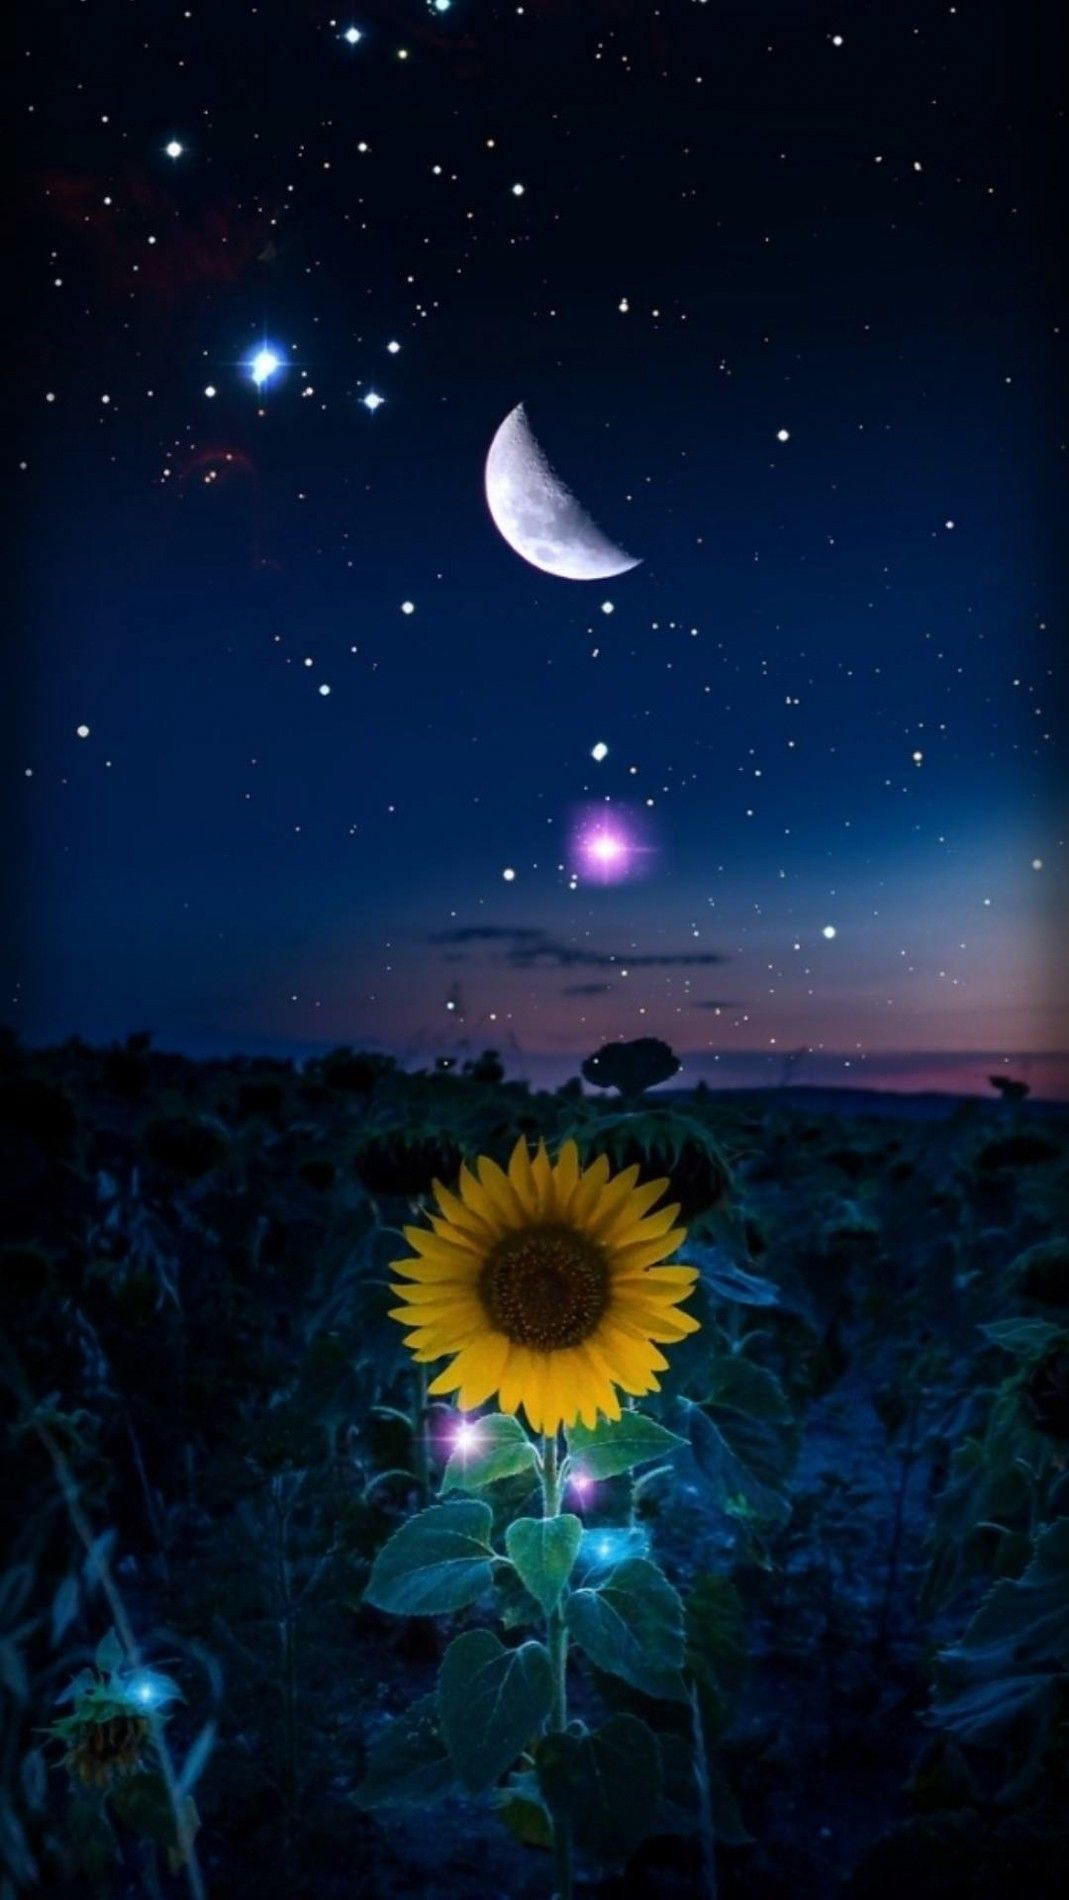 Starry night wallpaper, Sunflower .com